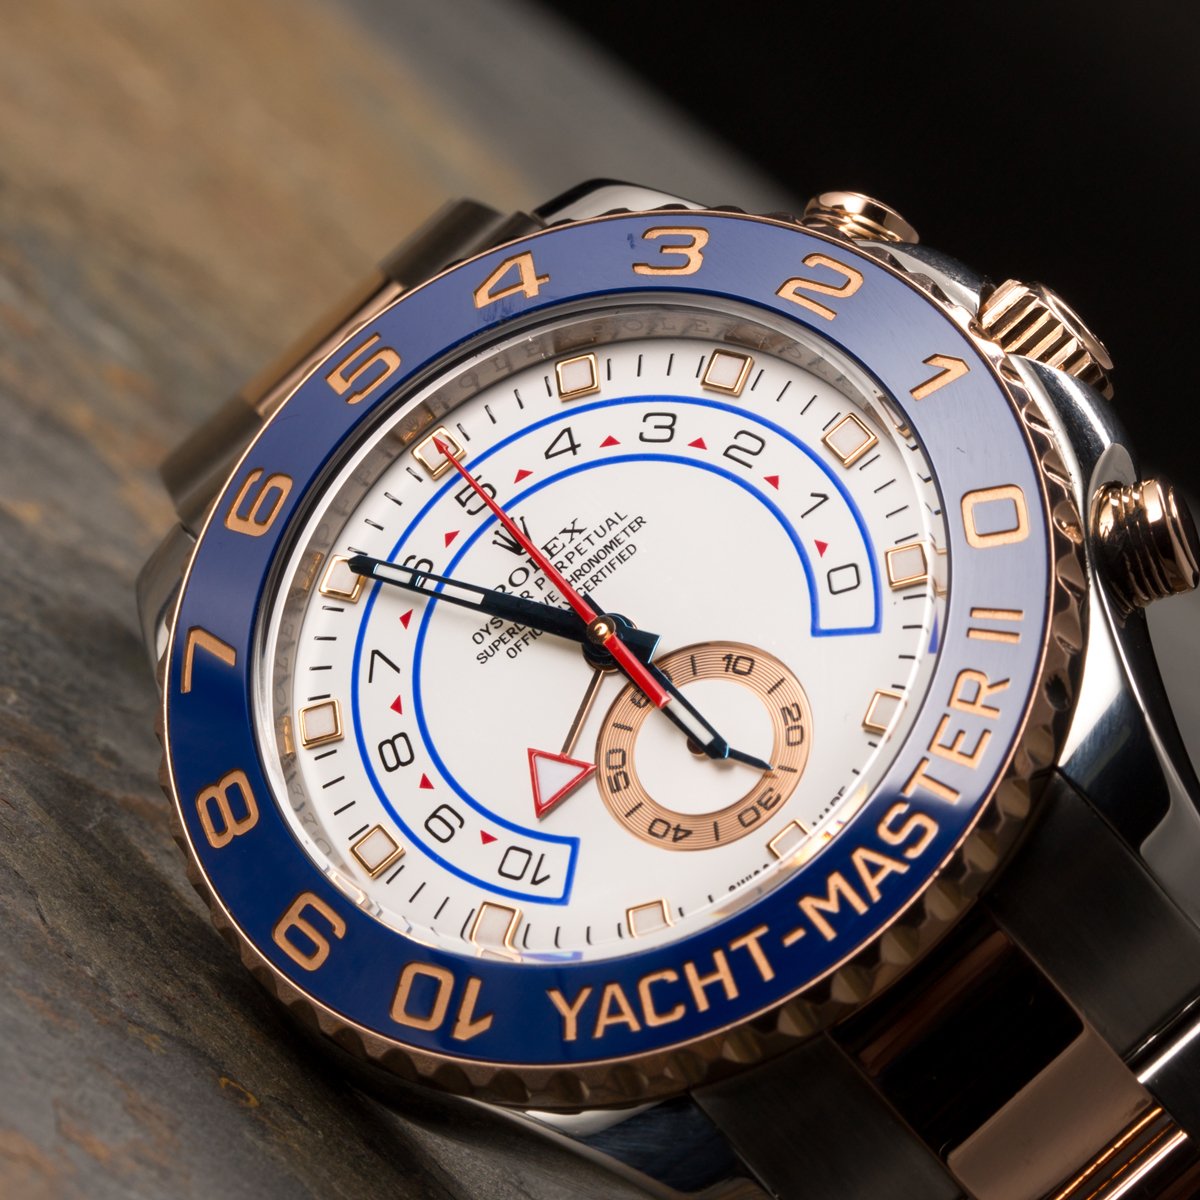 Rolex Yacht-Master II Countdown Timer regatta tutorial 116681 two-tone everose rolesor